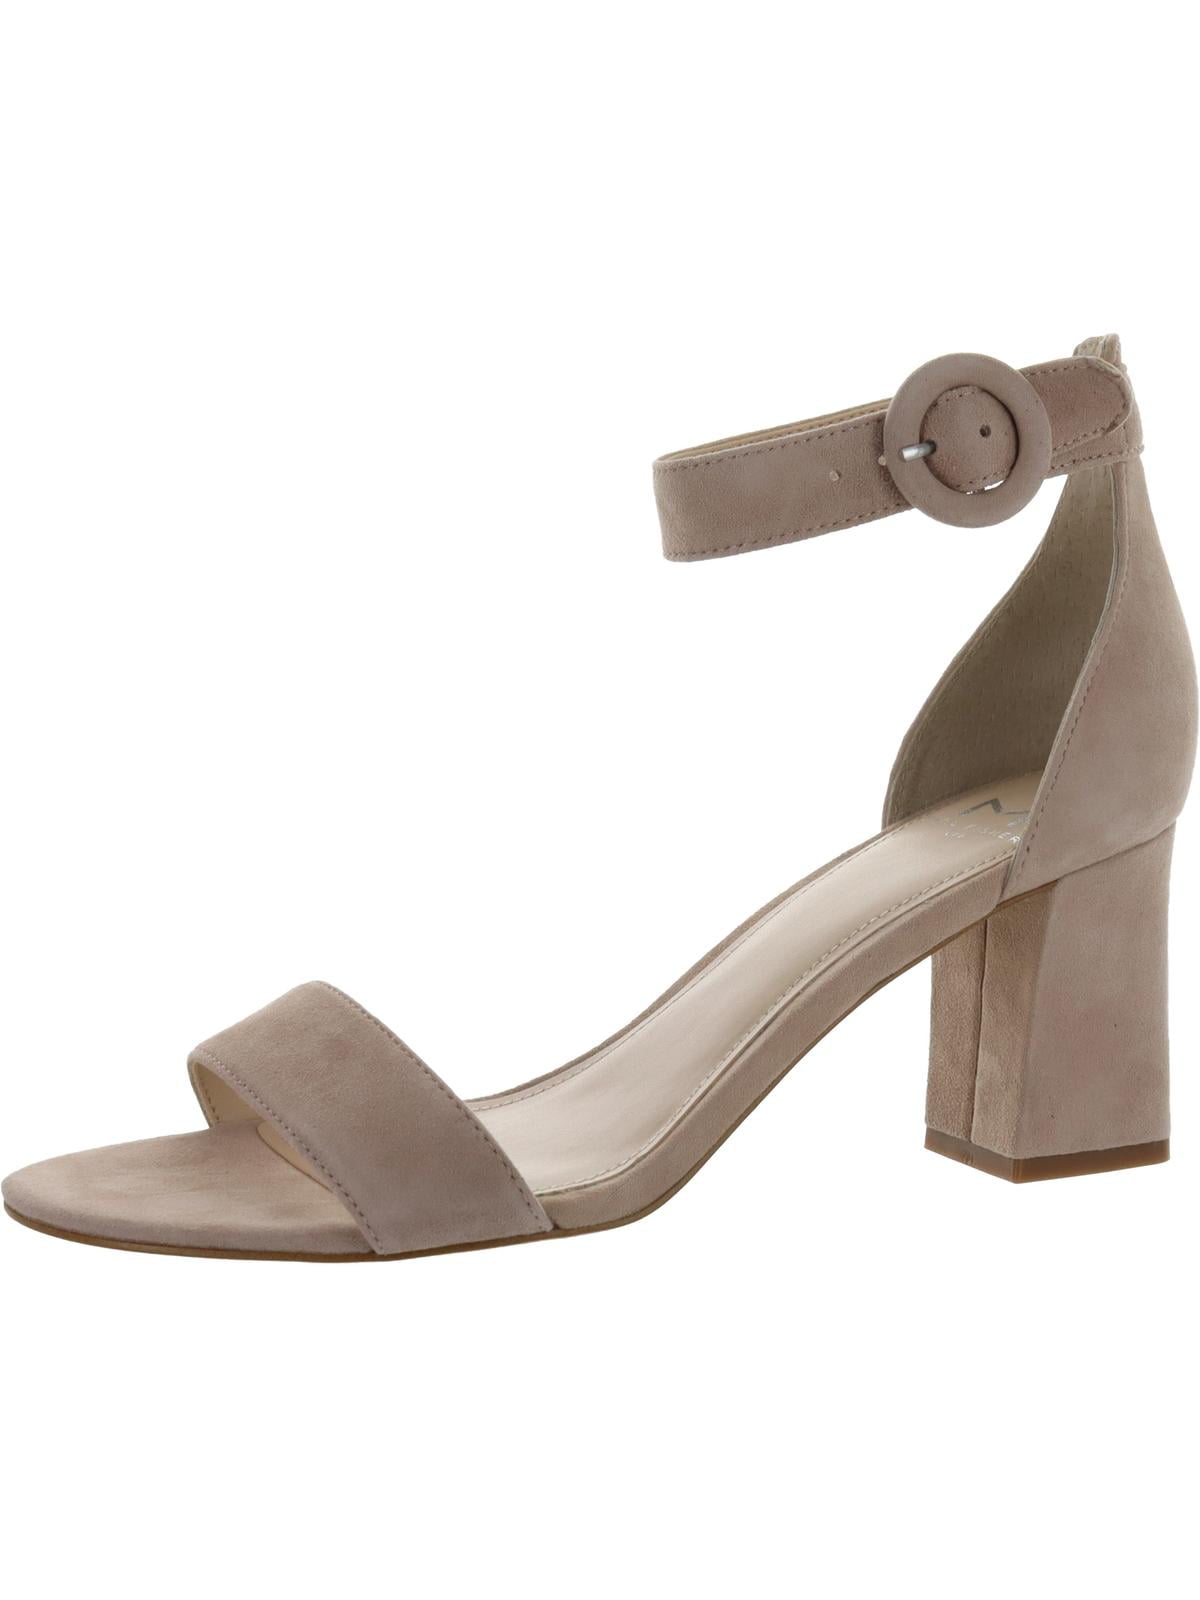 Marc Fisher LTD Womens Karlee Suede Dress Sandals Pink 6.5 Medium (B,M ...